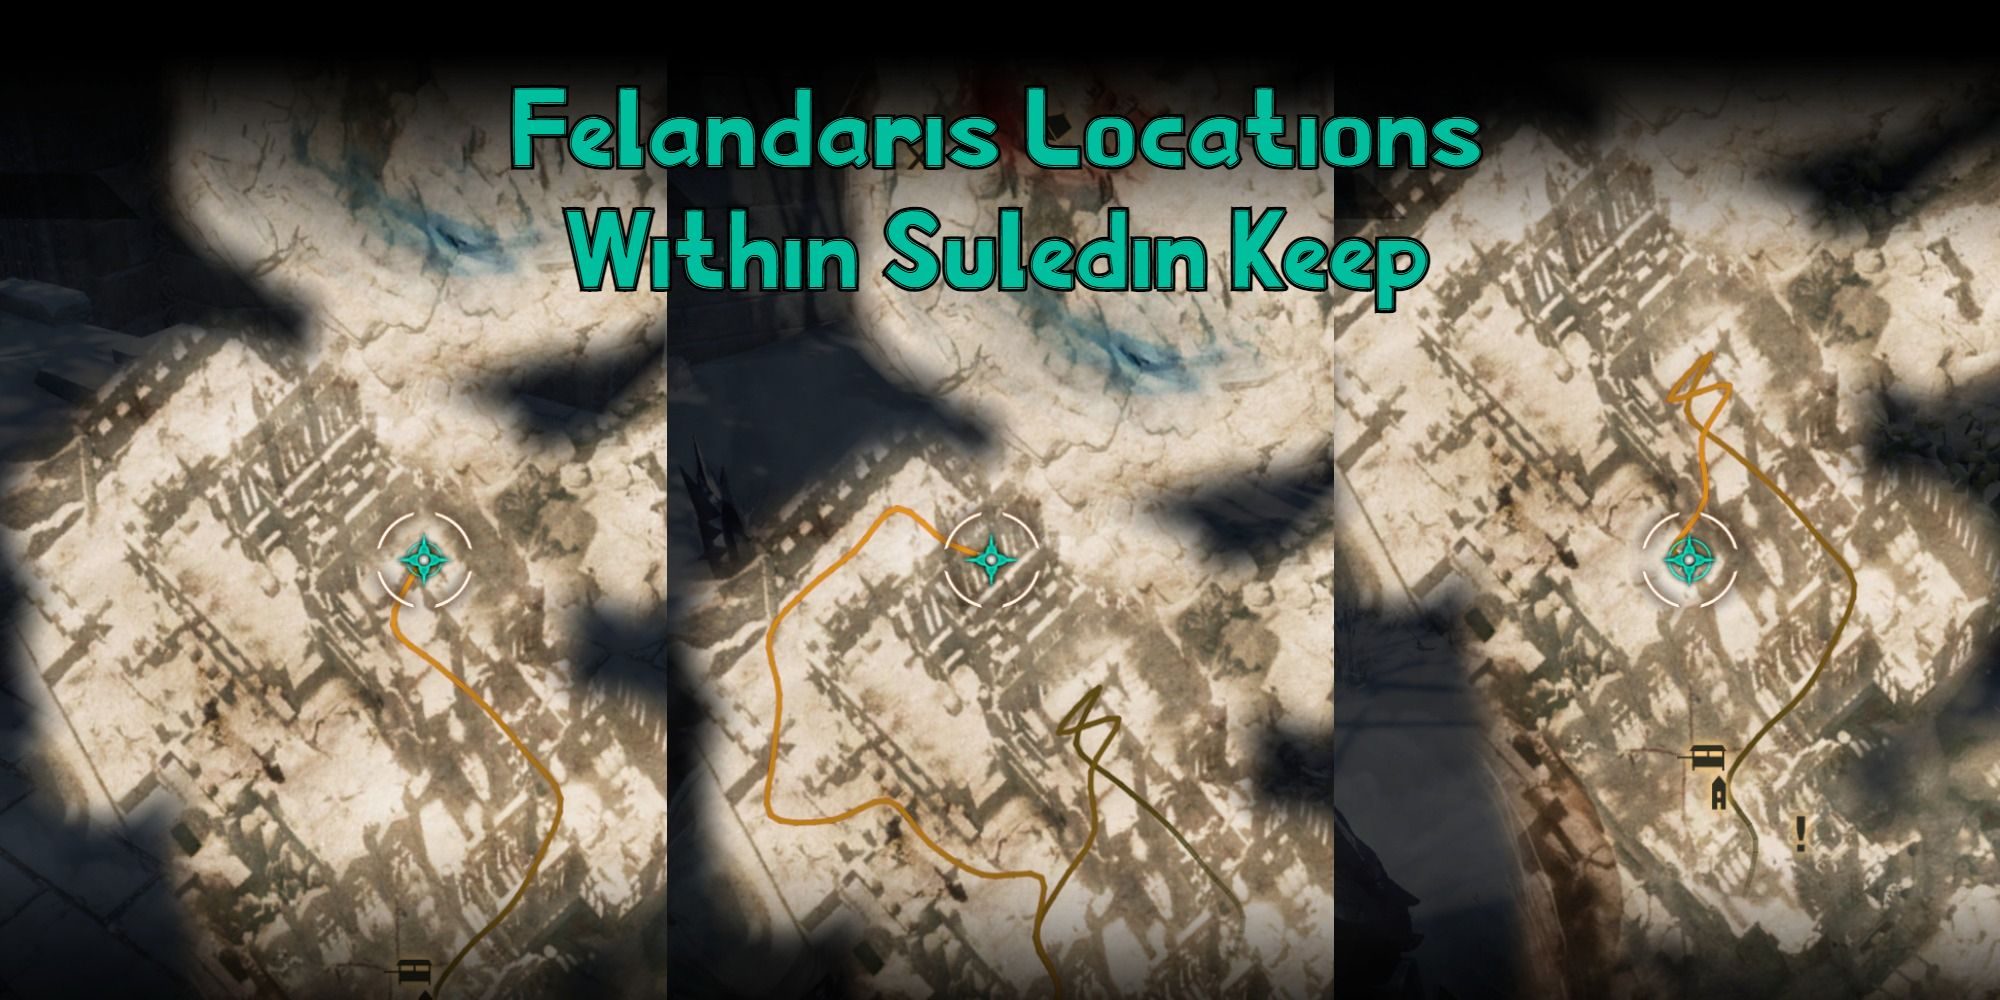 dragon-age-inquisition-felandaris-locations-within-suledin-keep-8384260